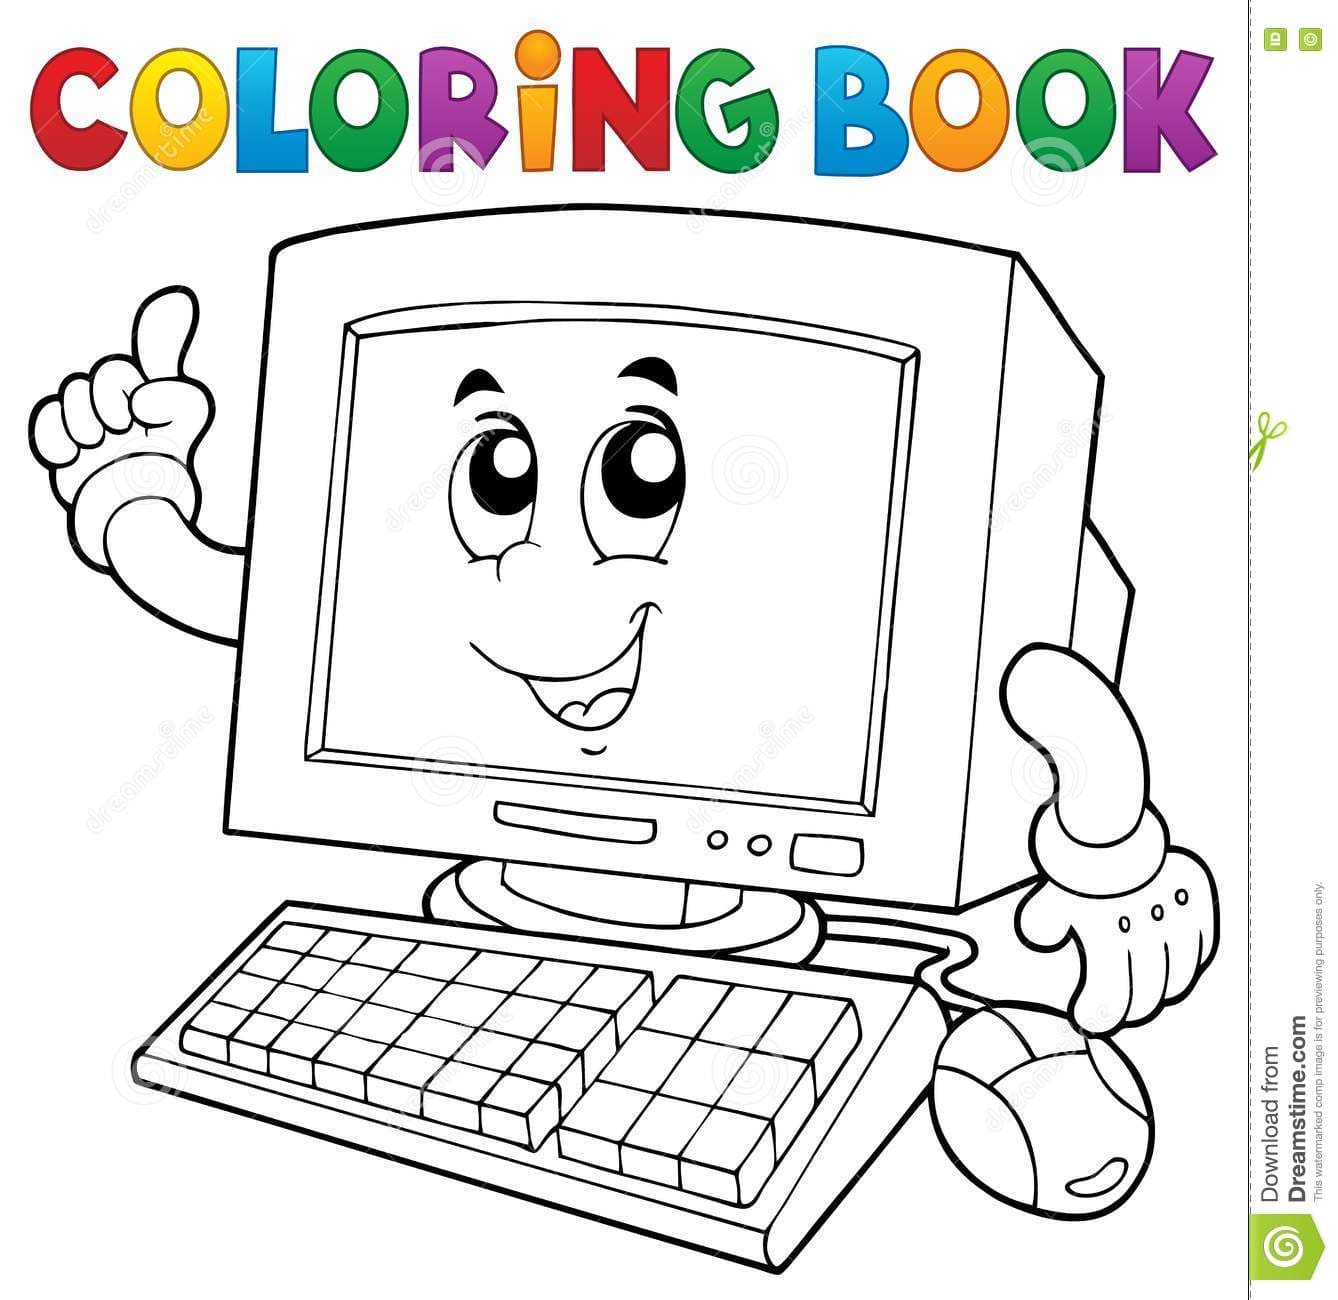 Coloring book computer thematics